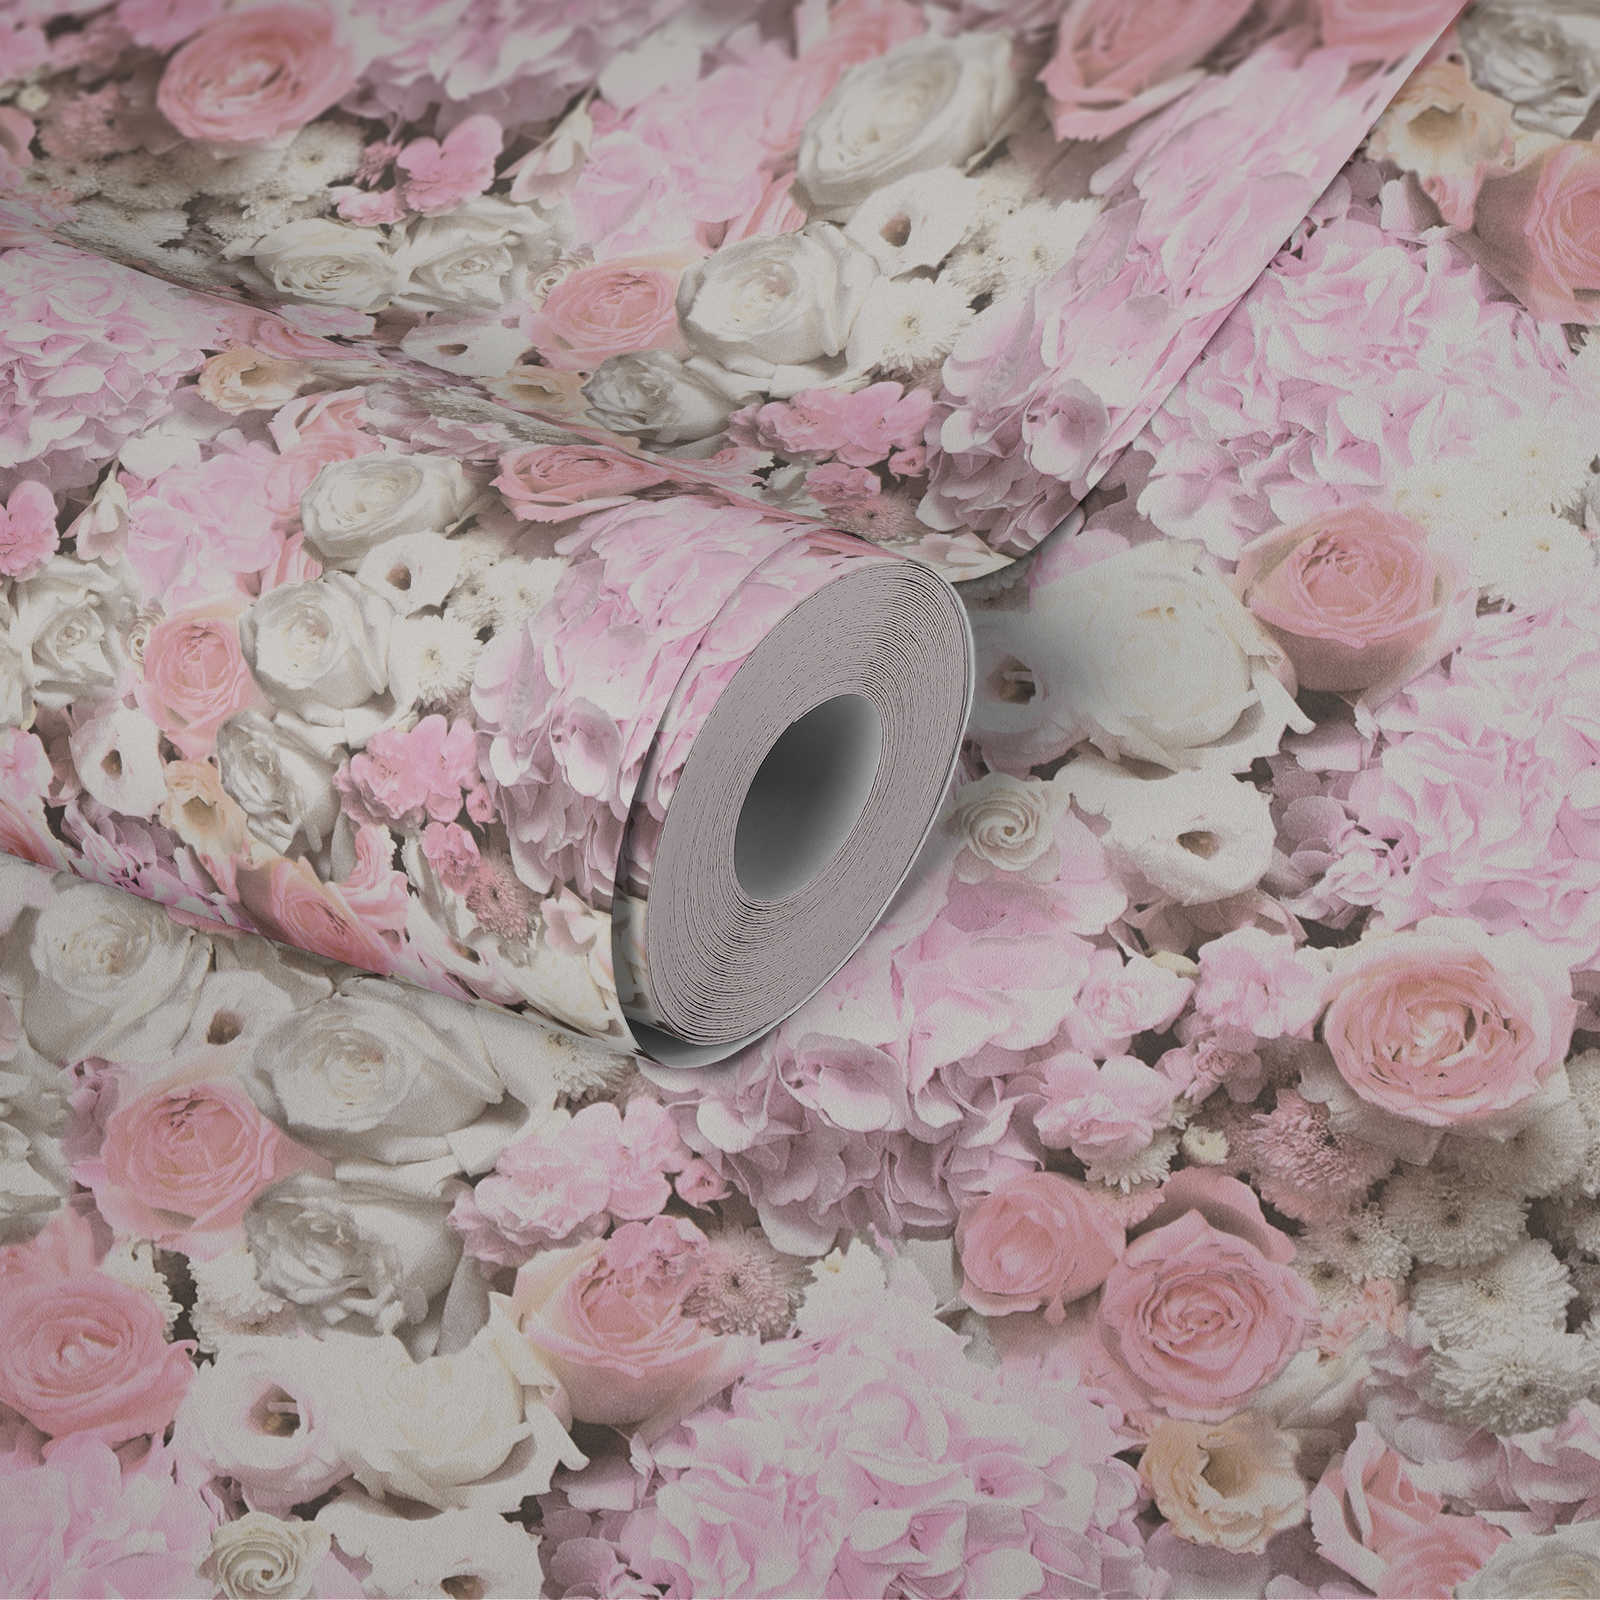             behang rozen & bloesems patroon - roze, wit
        